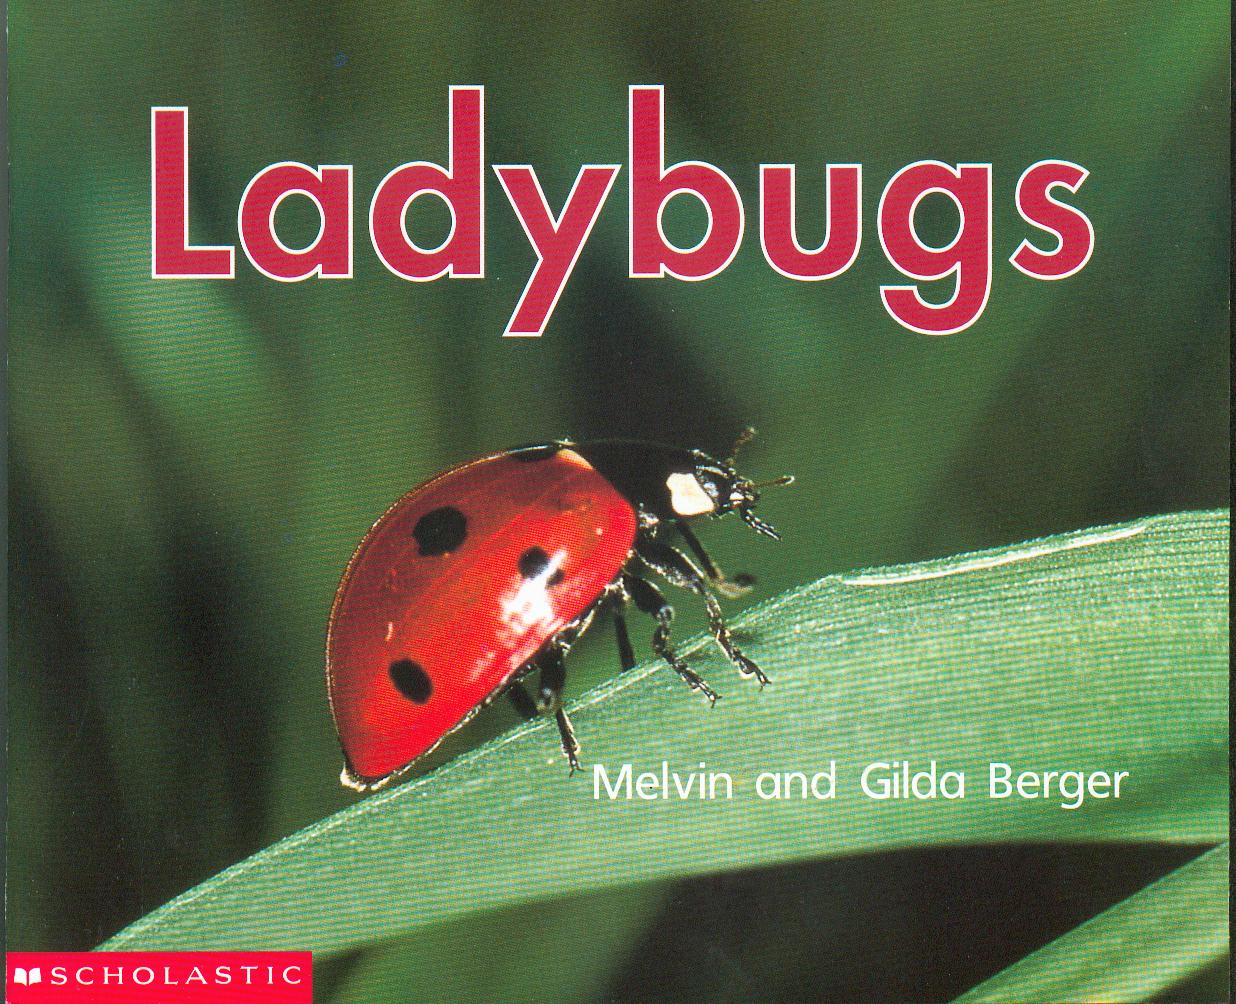 Ladybugs / Melvin and Gilda Berger.